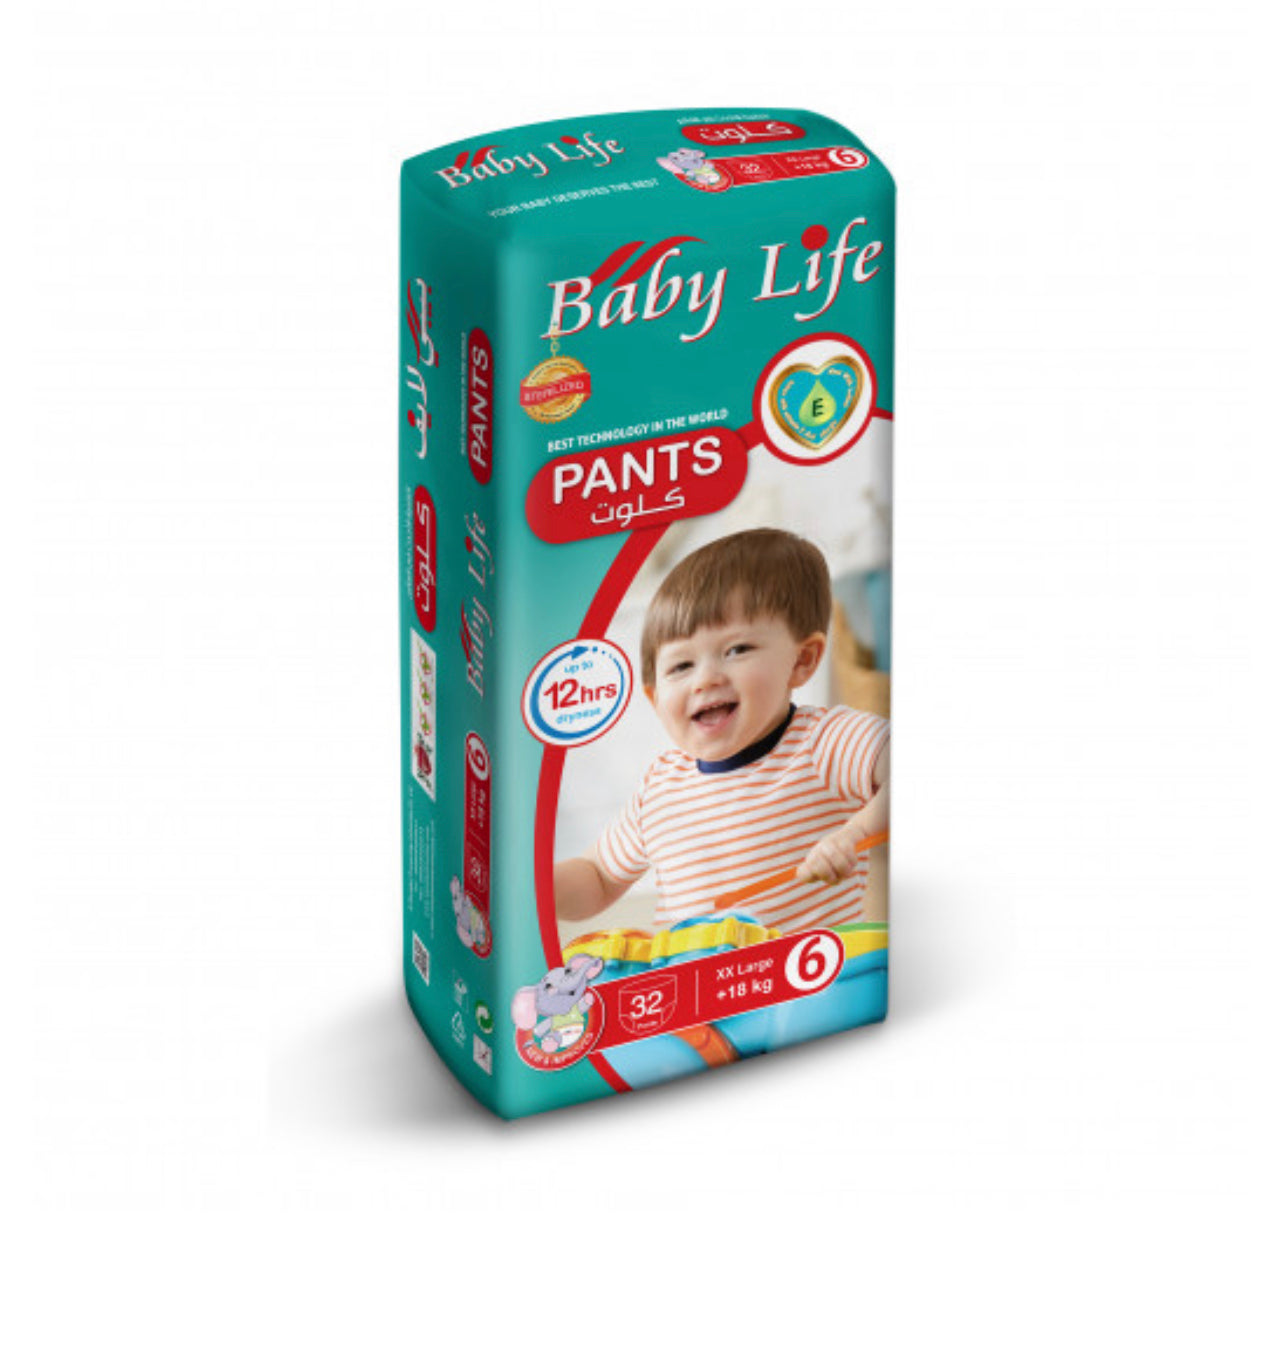 BABY LIFE PANTS SIZE 6